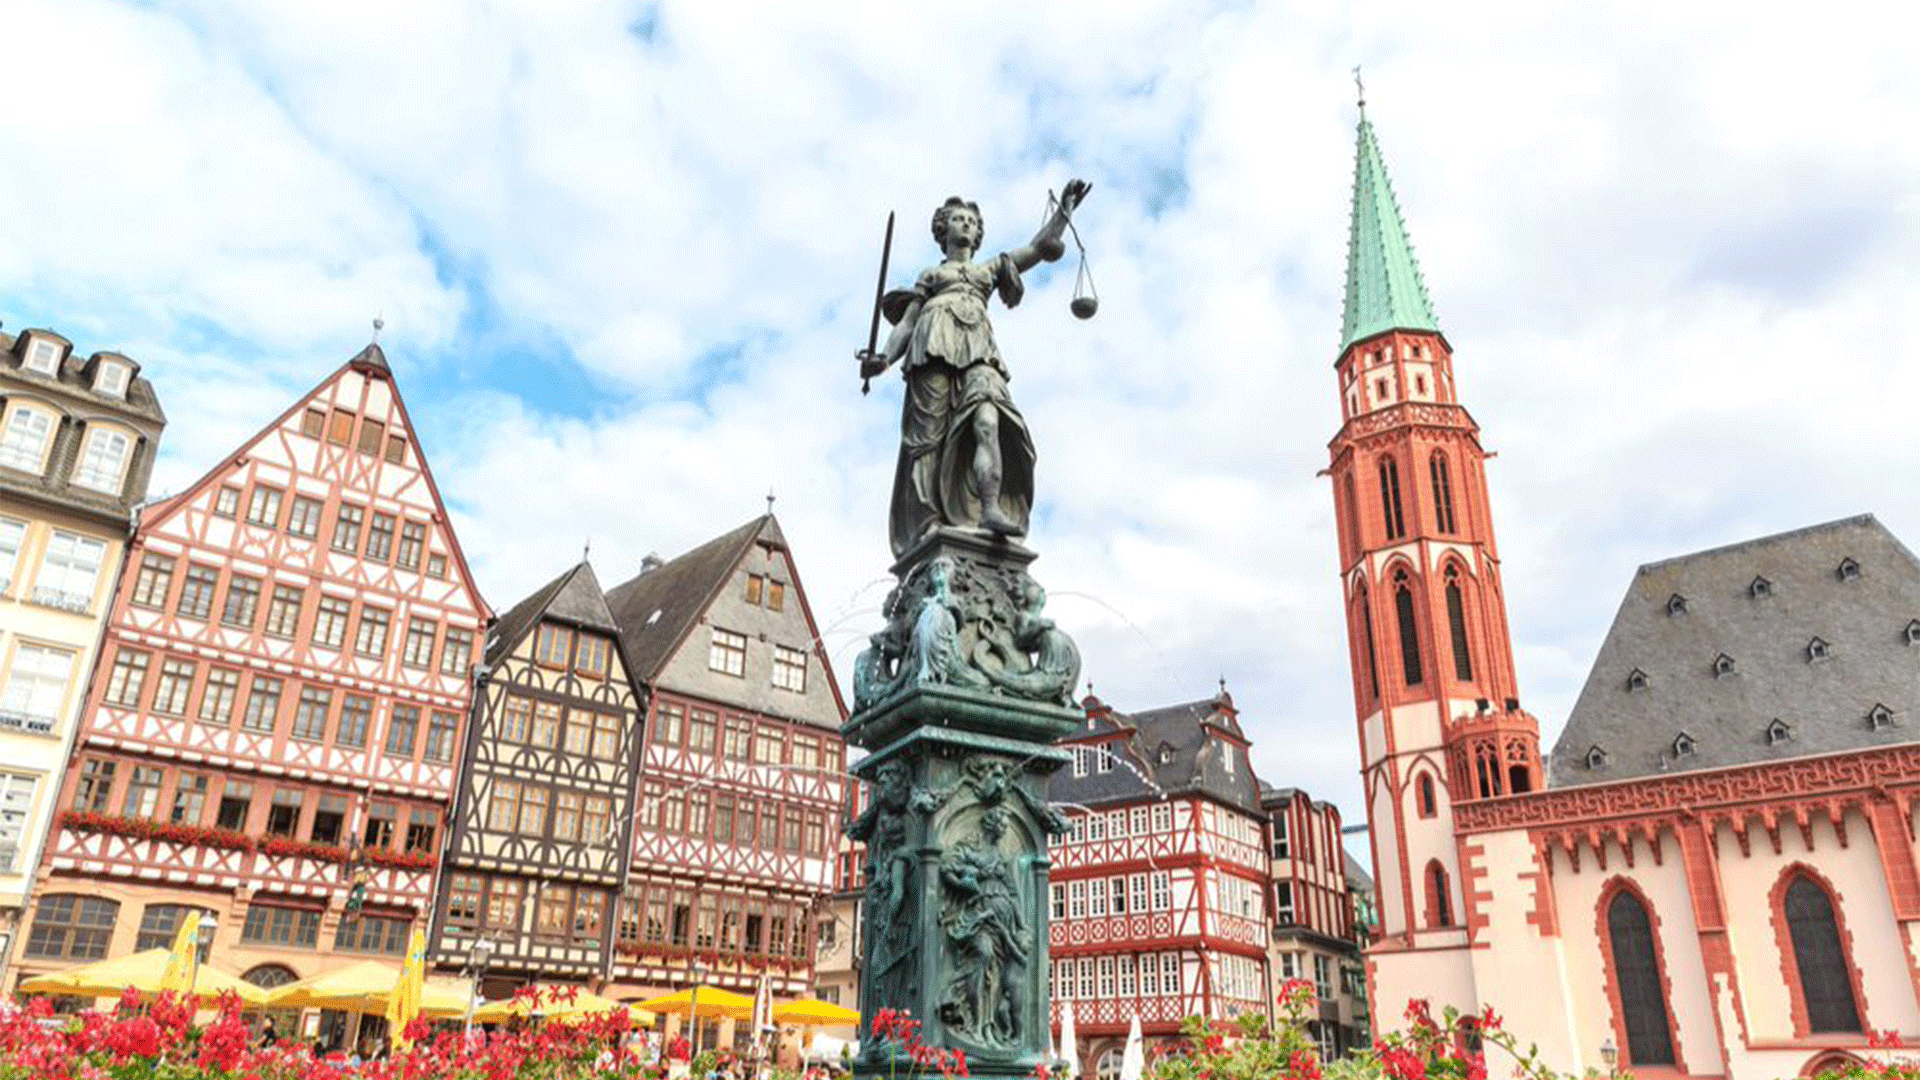 Frankfurt market square